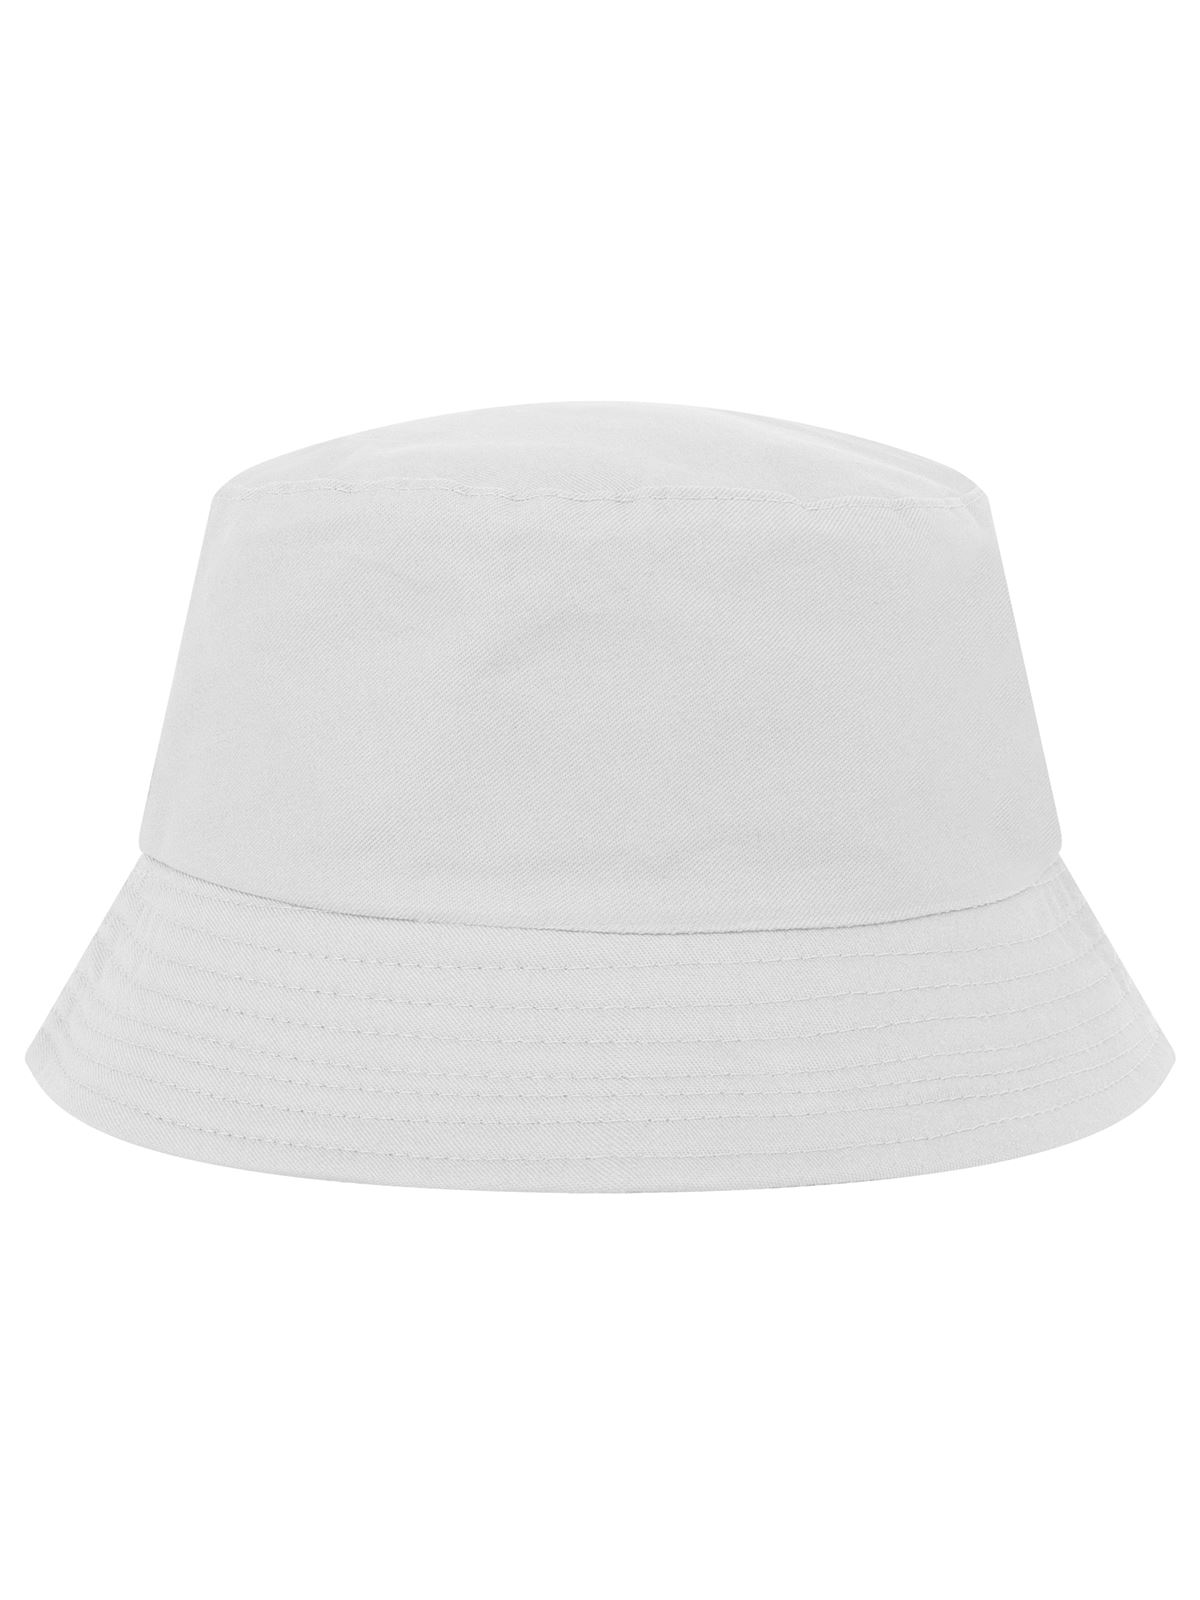 CUSTBUCKETHAT Customer Supplied Bucket Hat Image 1